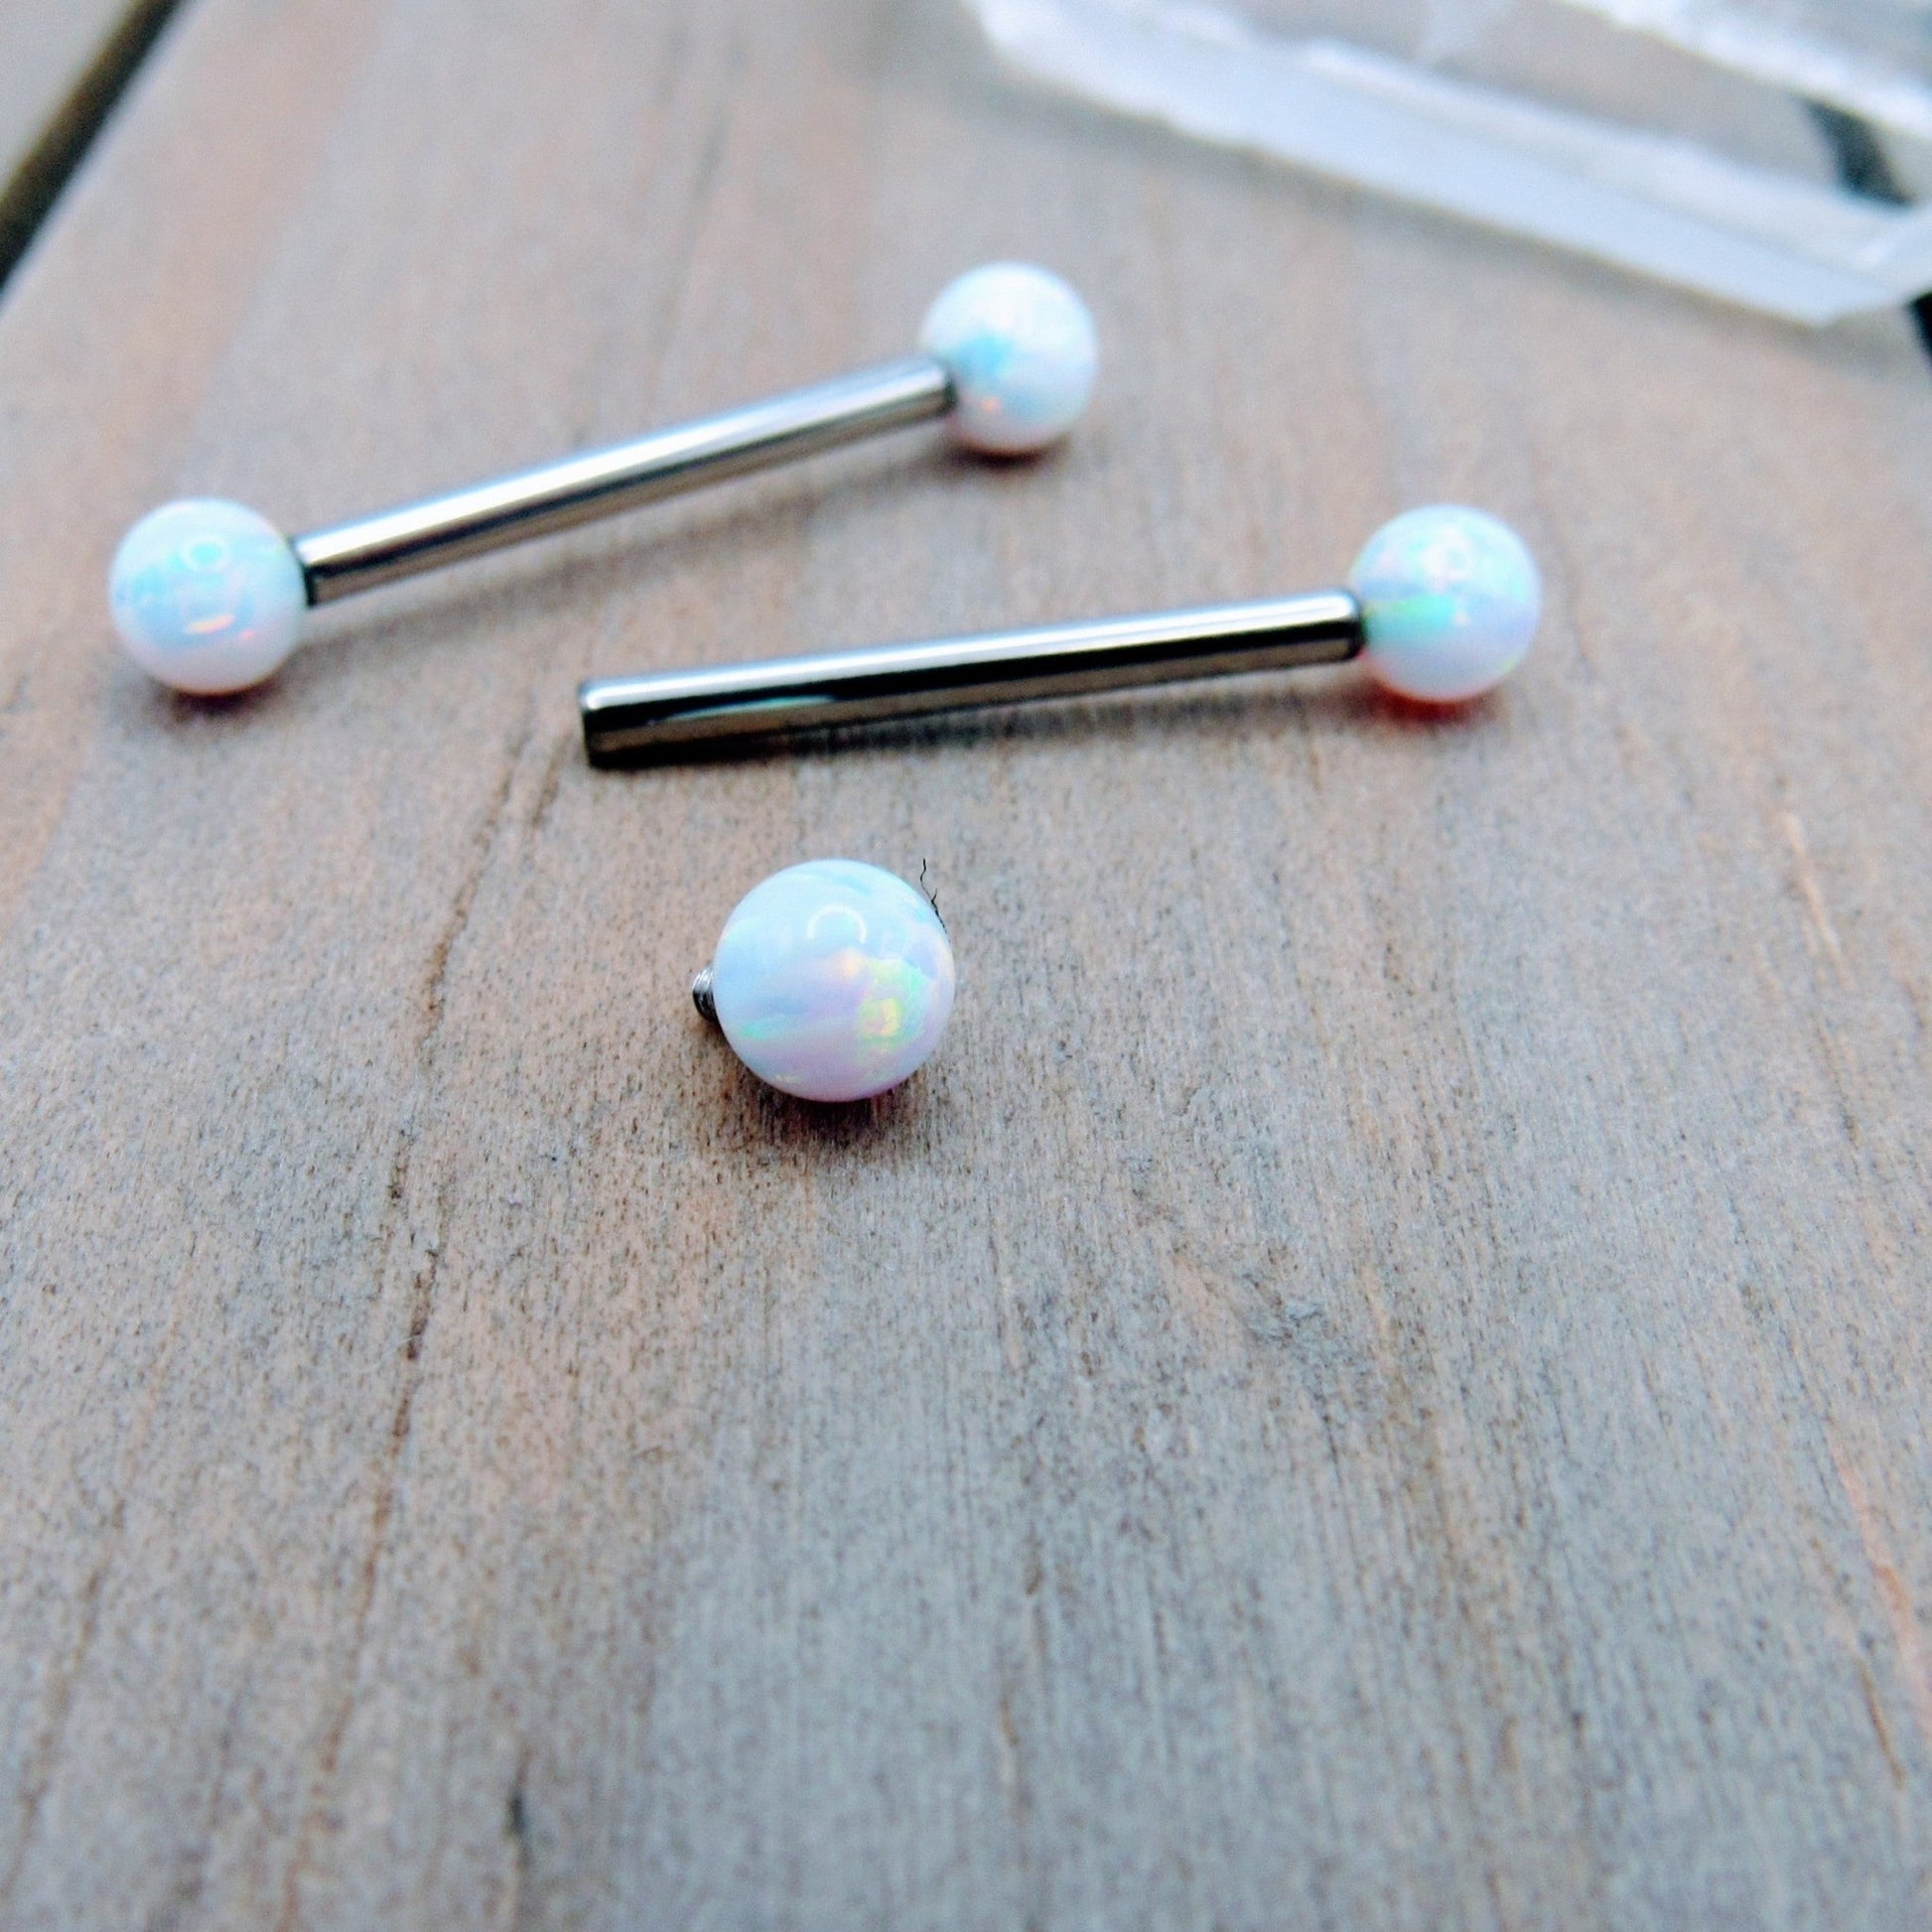 14g 4mm White opal nipple piercing barbell set internally threaded titanium bars - Siren Body Jewelry